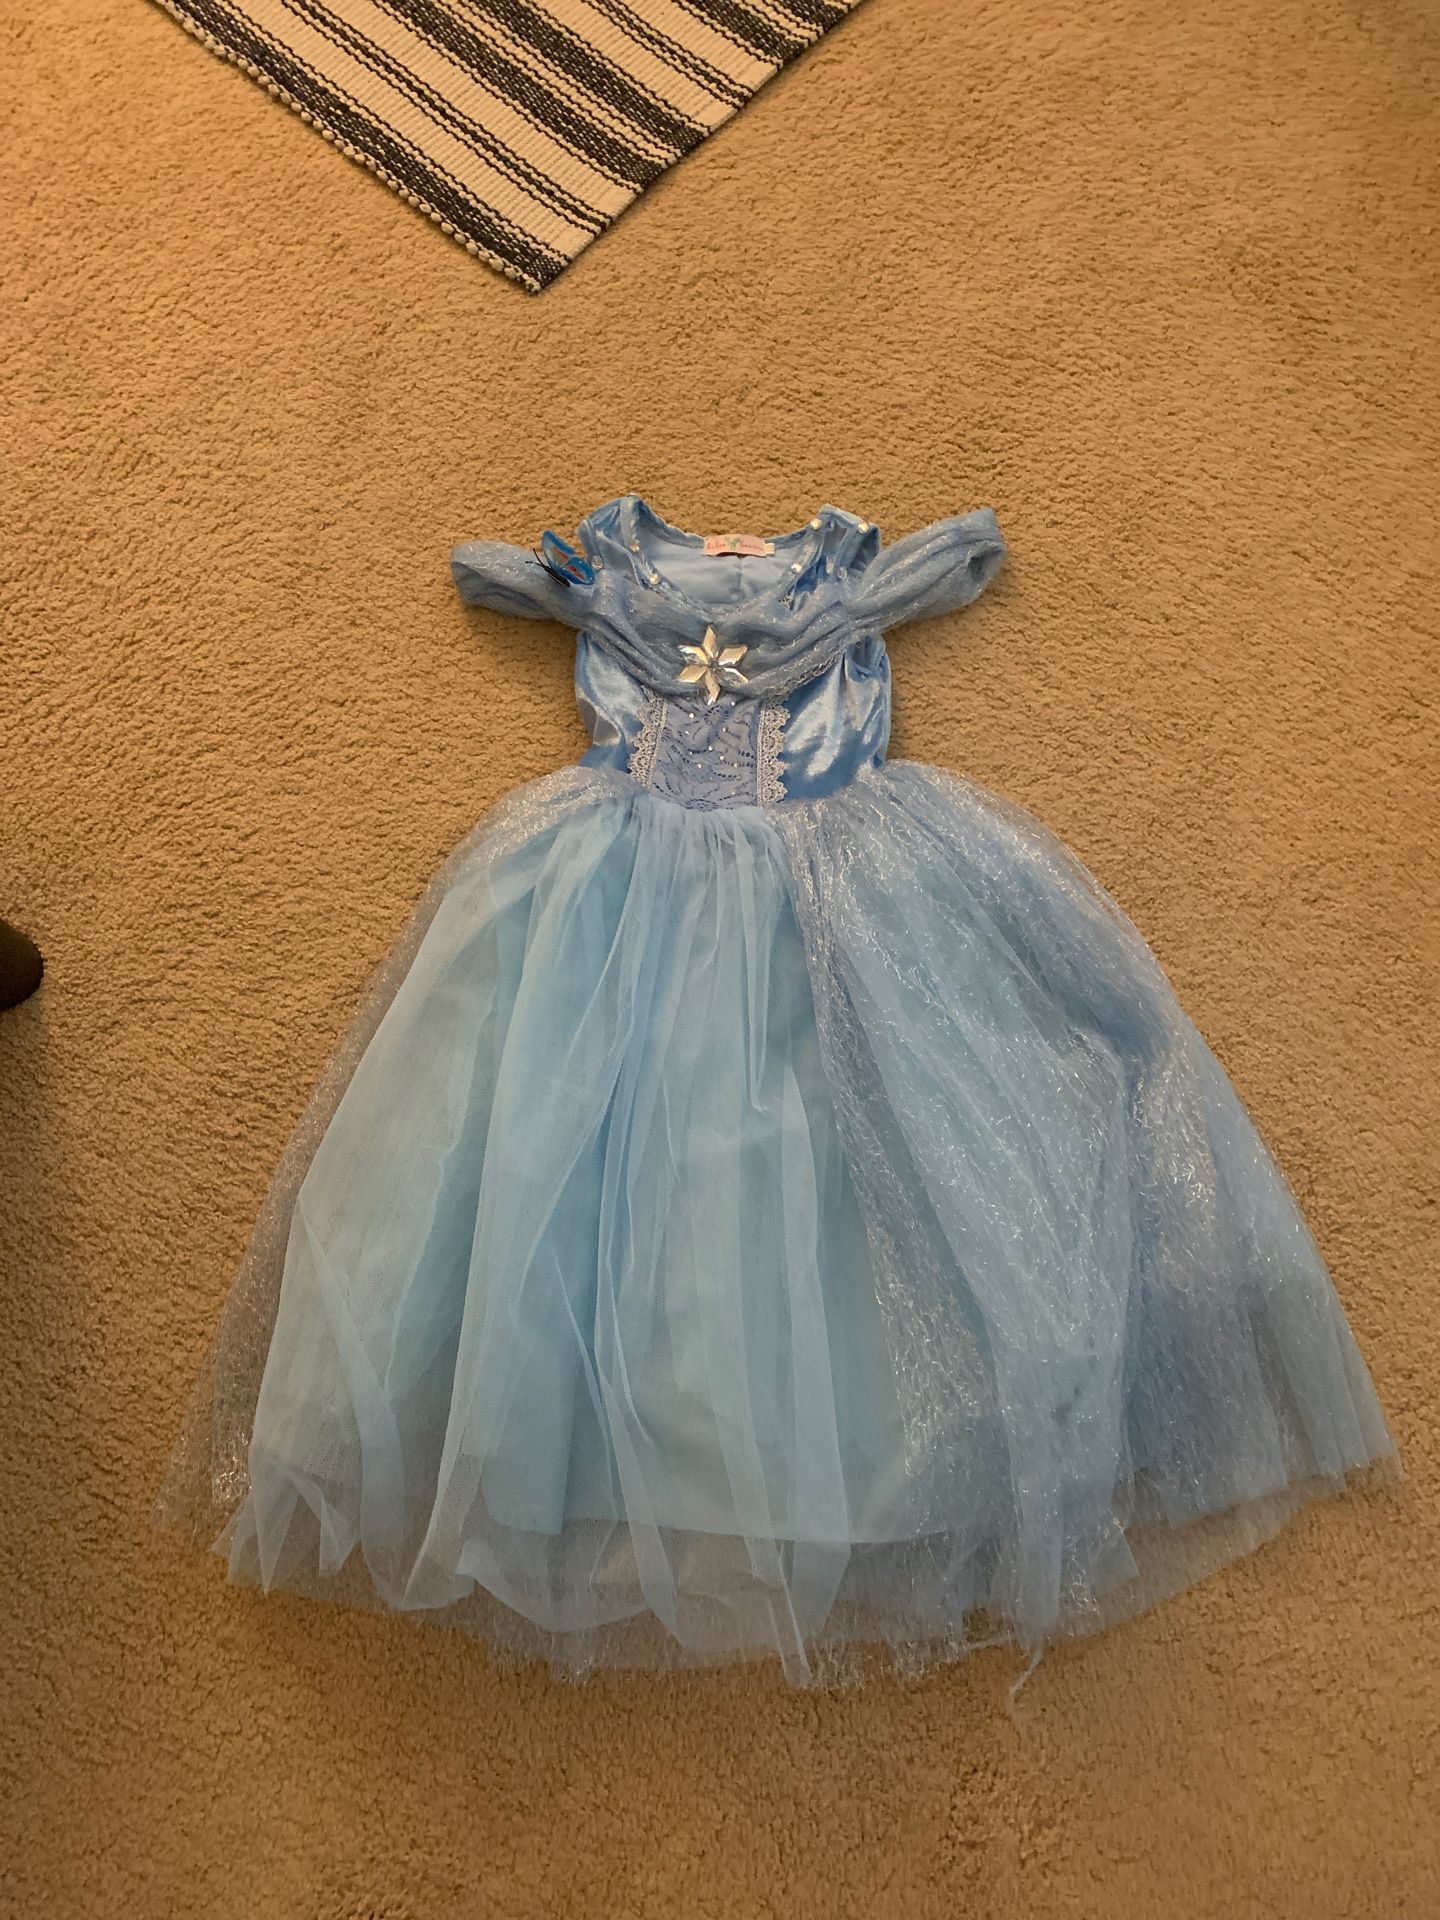 Elsa princess Halloween costume 5,6 T $10